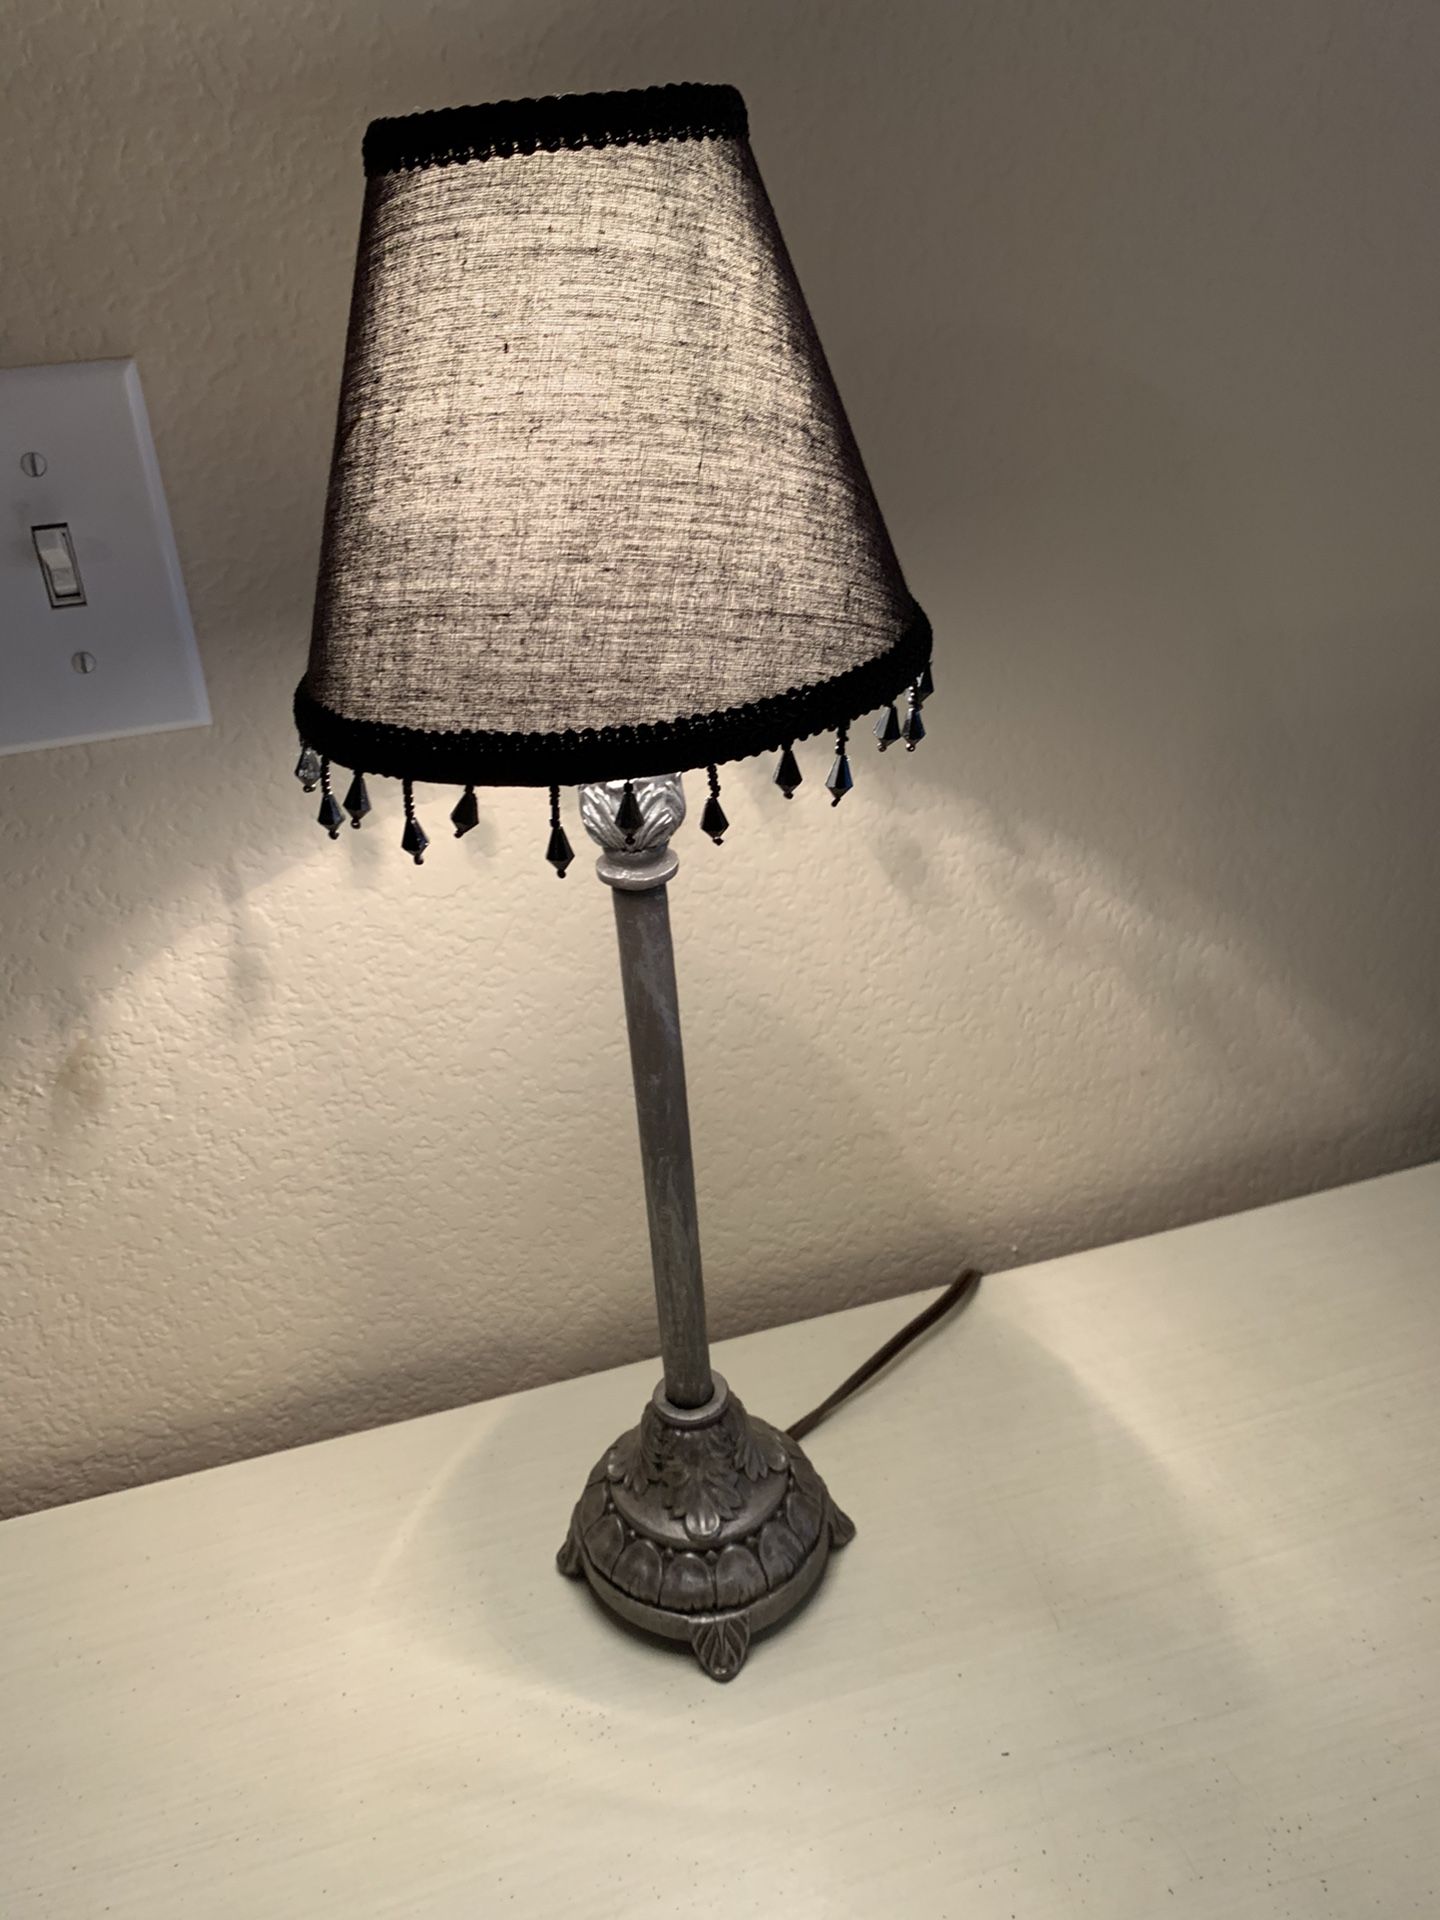 Nice little lamp